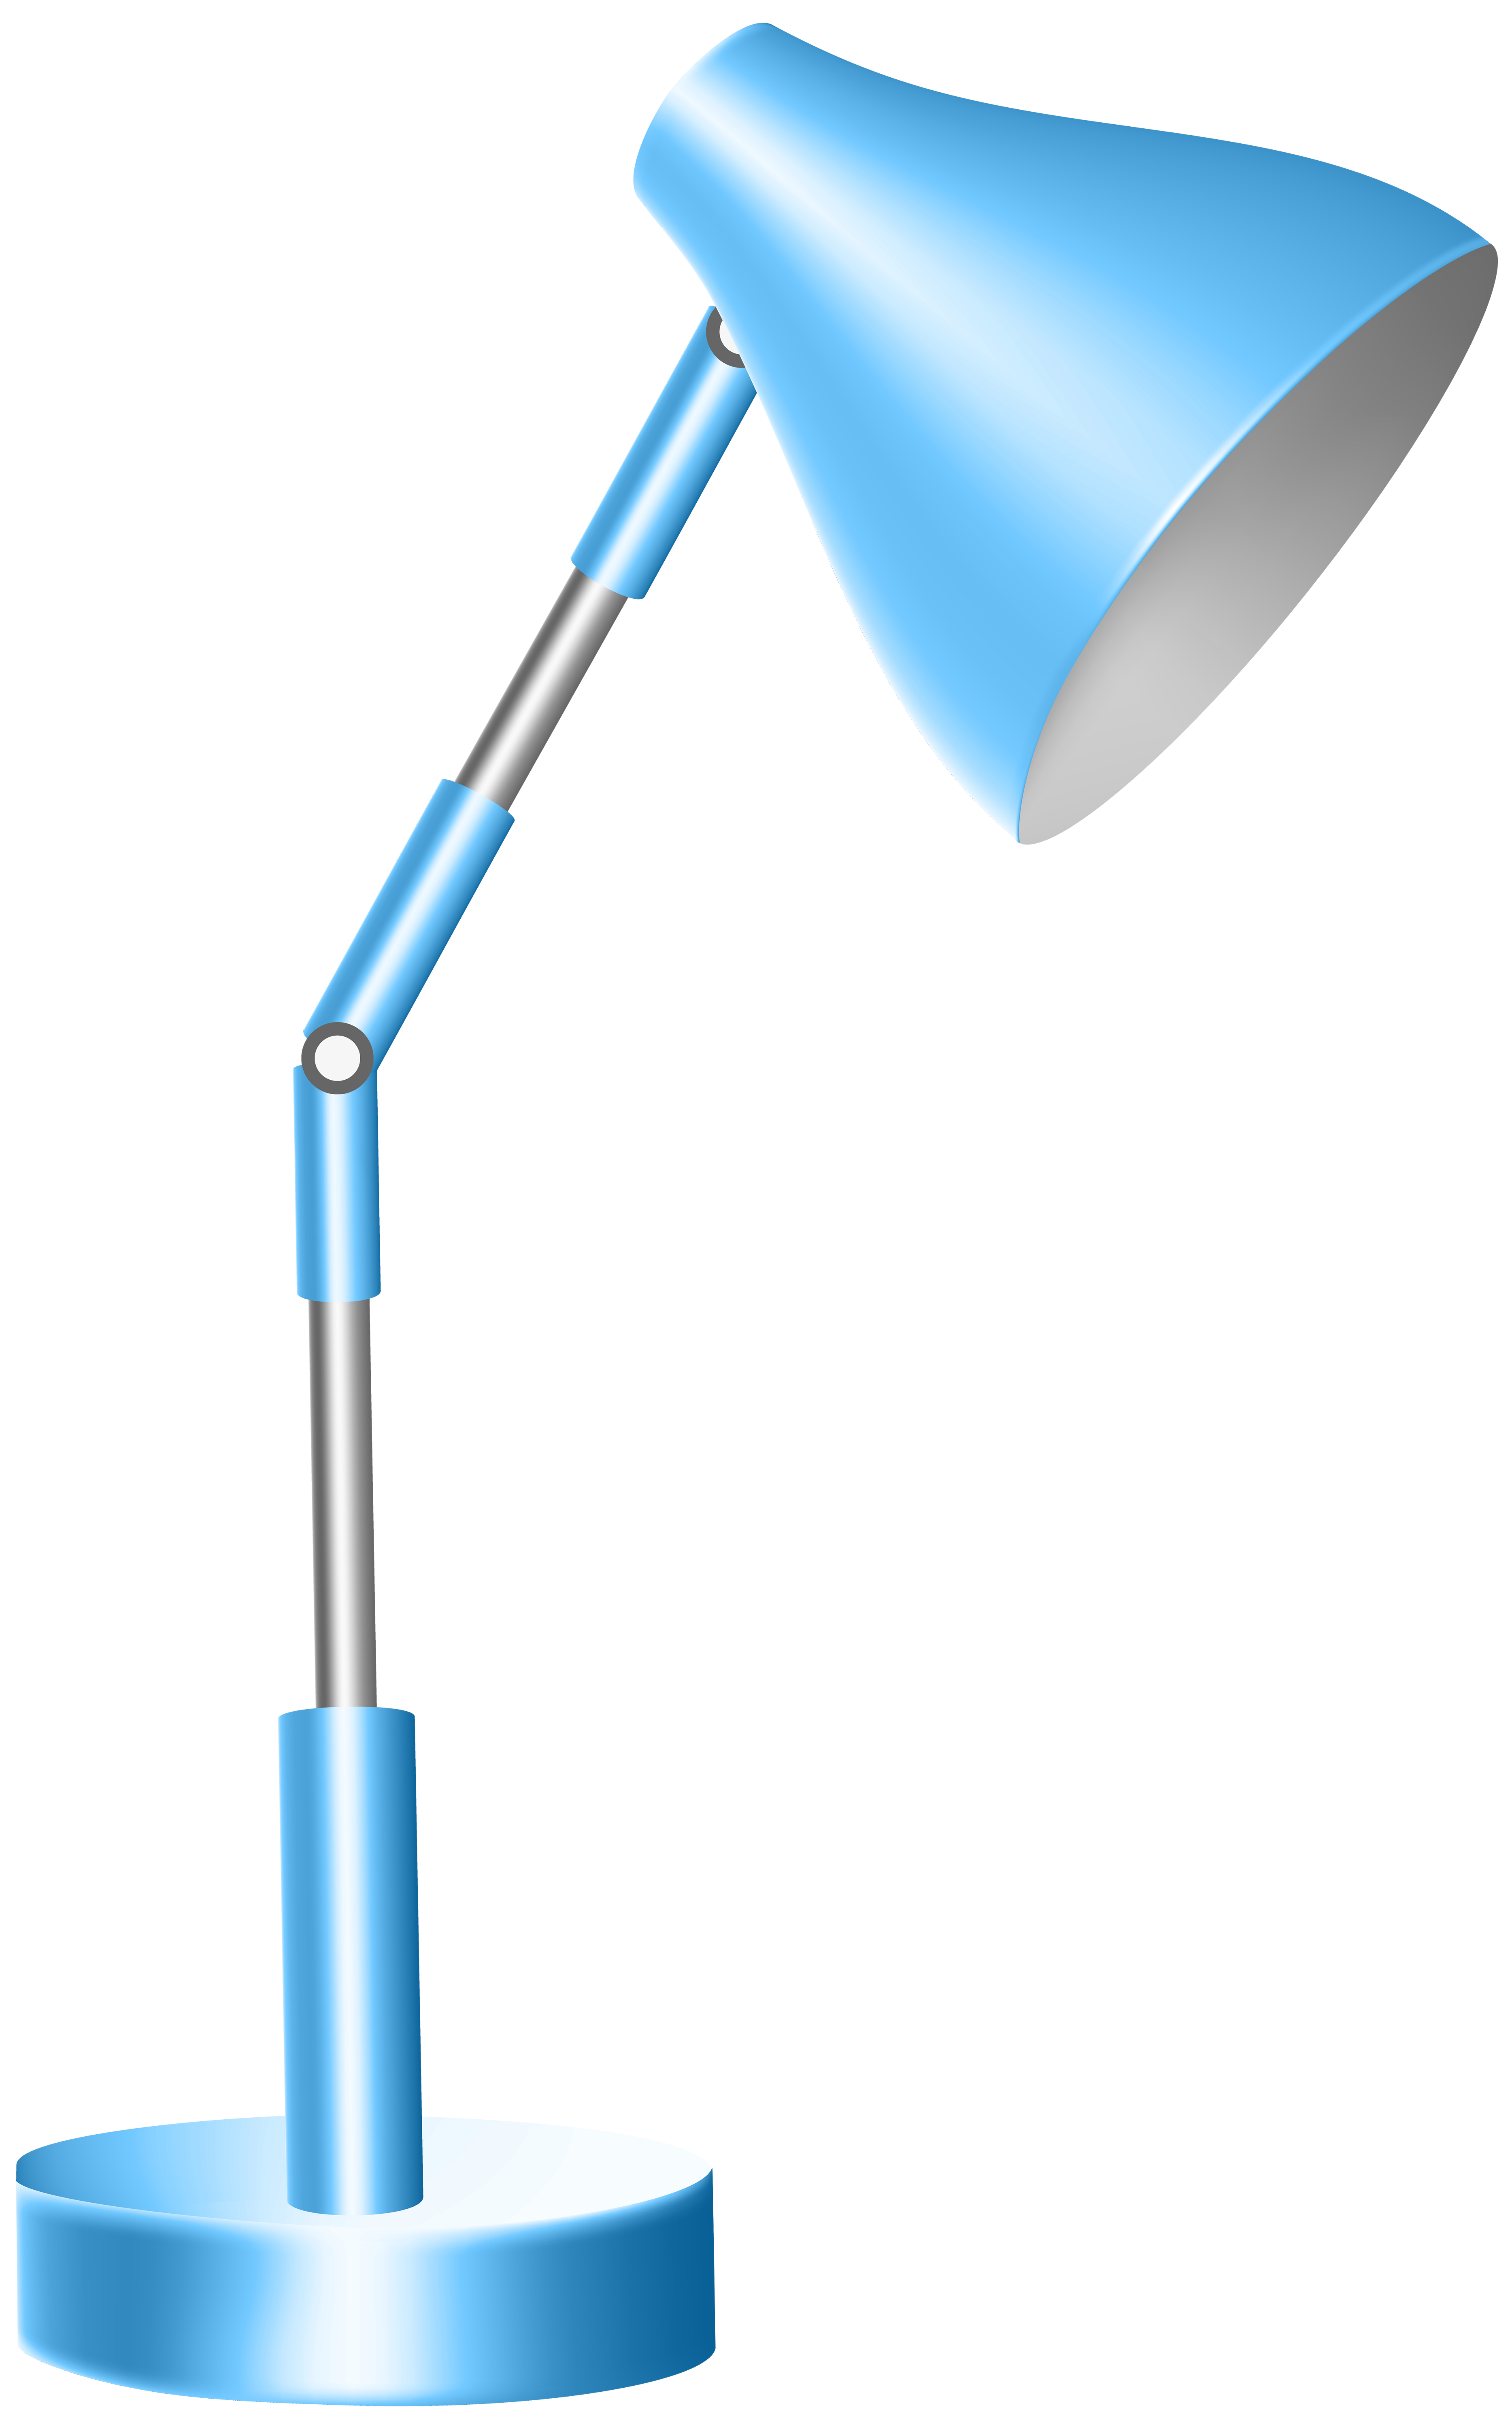 Lamp Clip Art